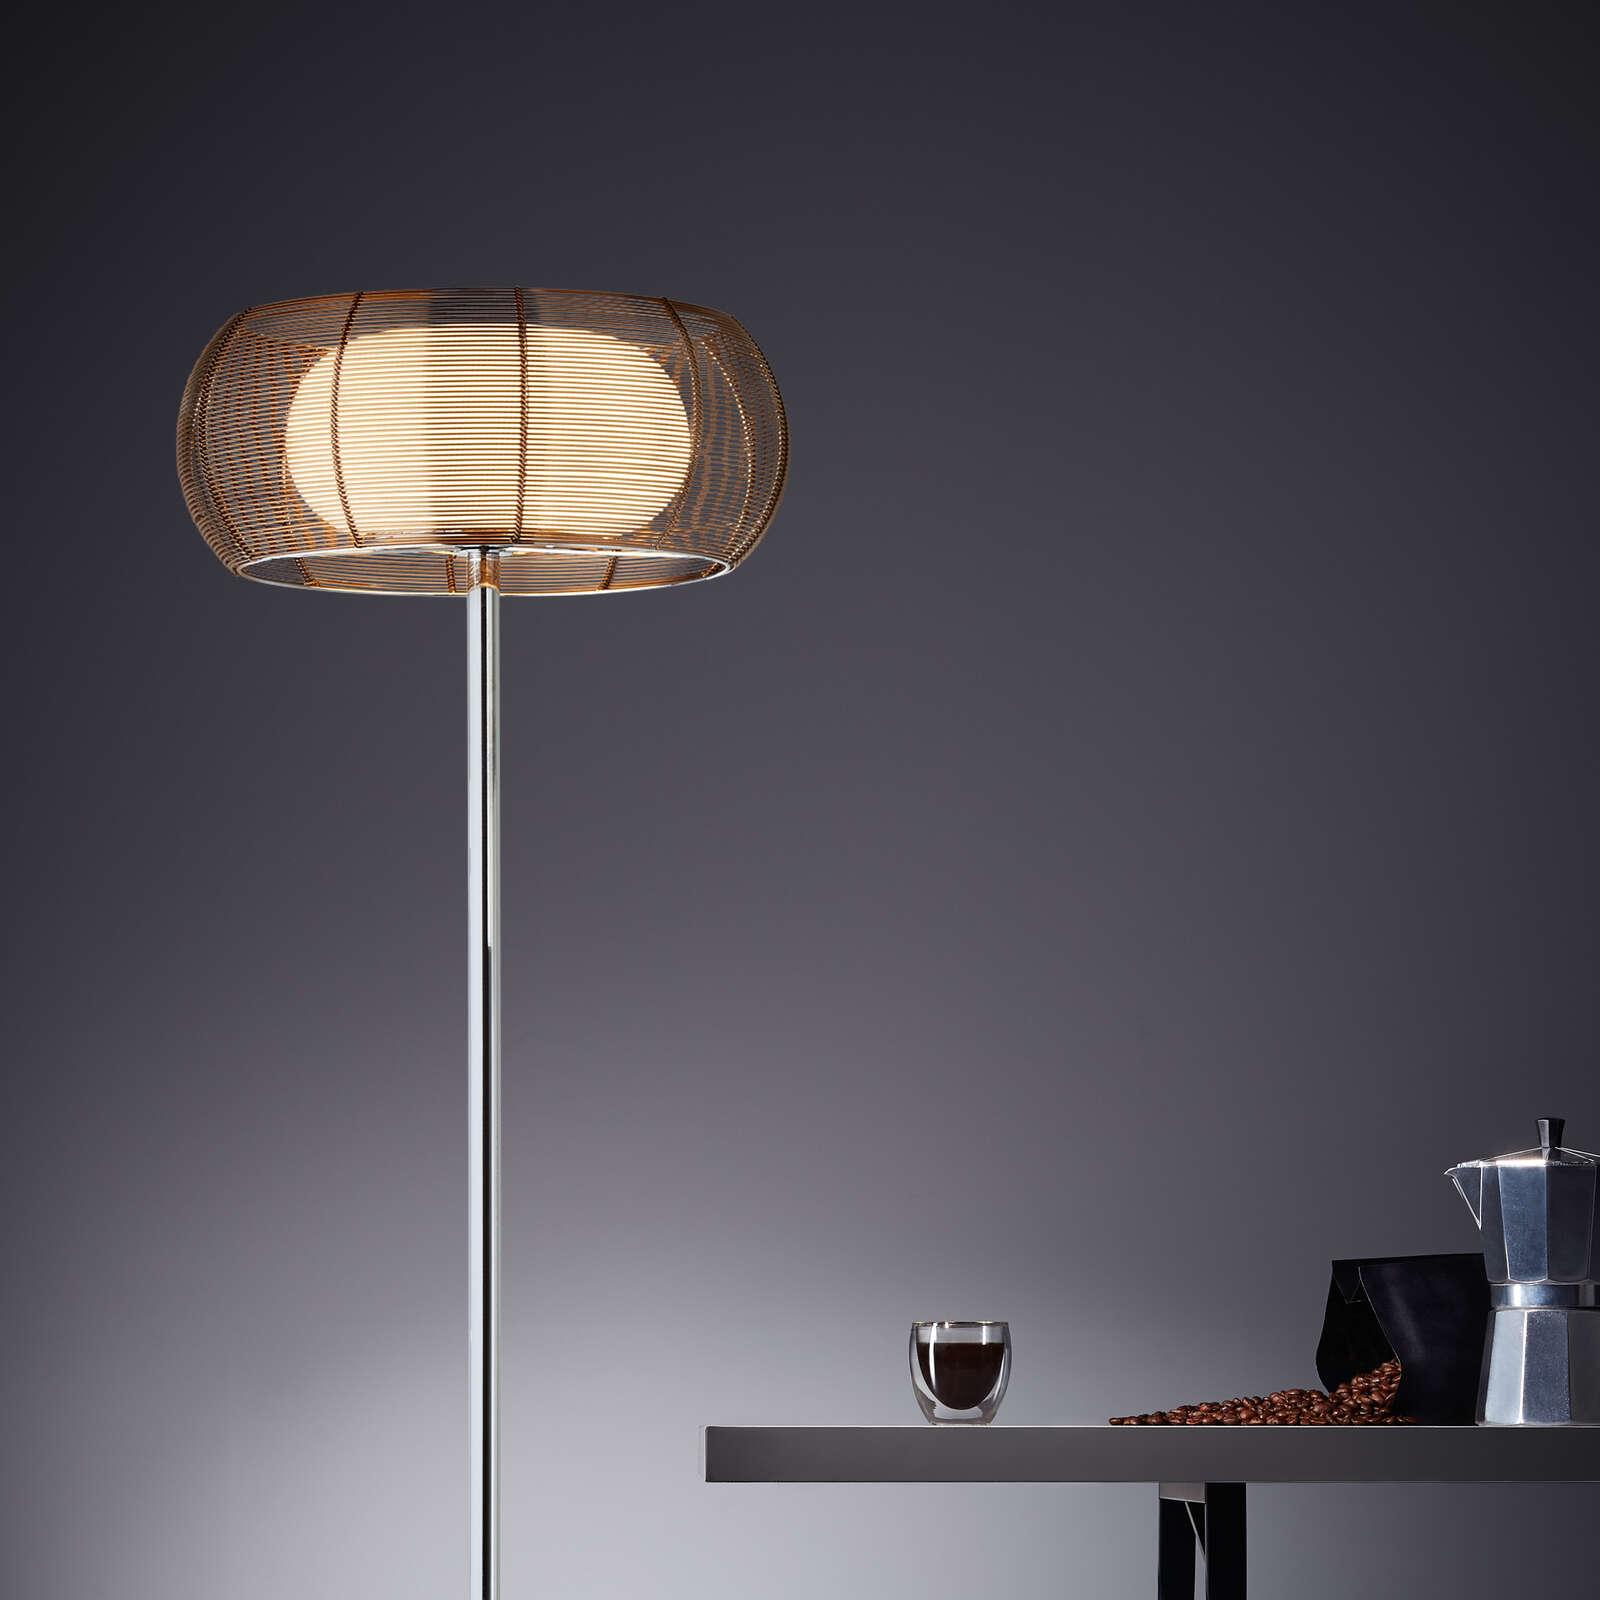             Glazen vloerlamp - Maxime 11 - Bruin
        